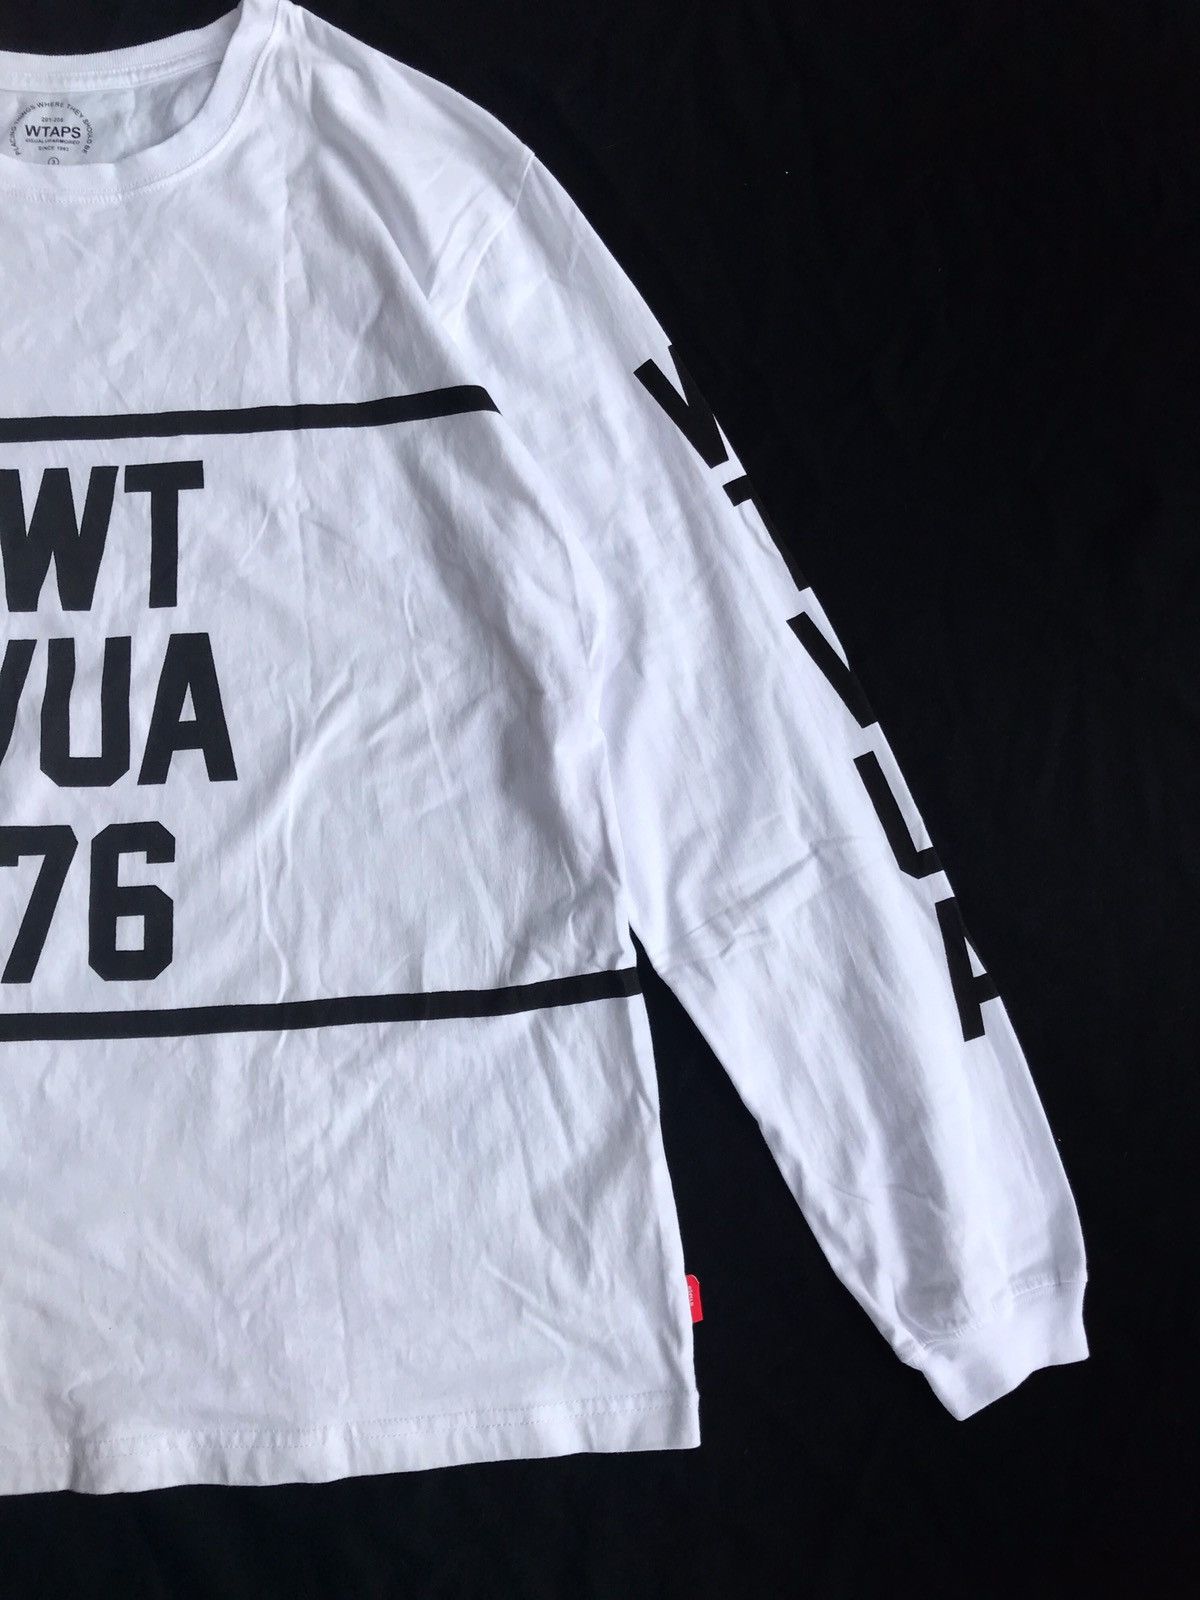 Wtaps WTVUA76 Long Sleeve Tshirt Made in Japan - 5